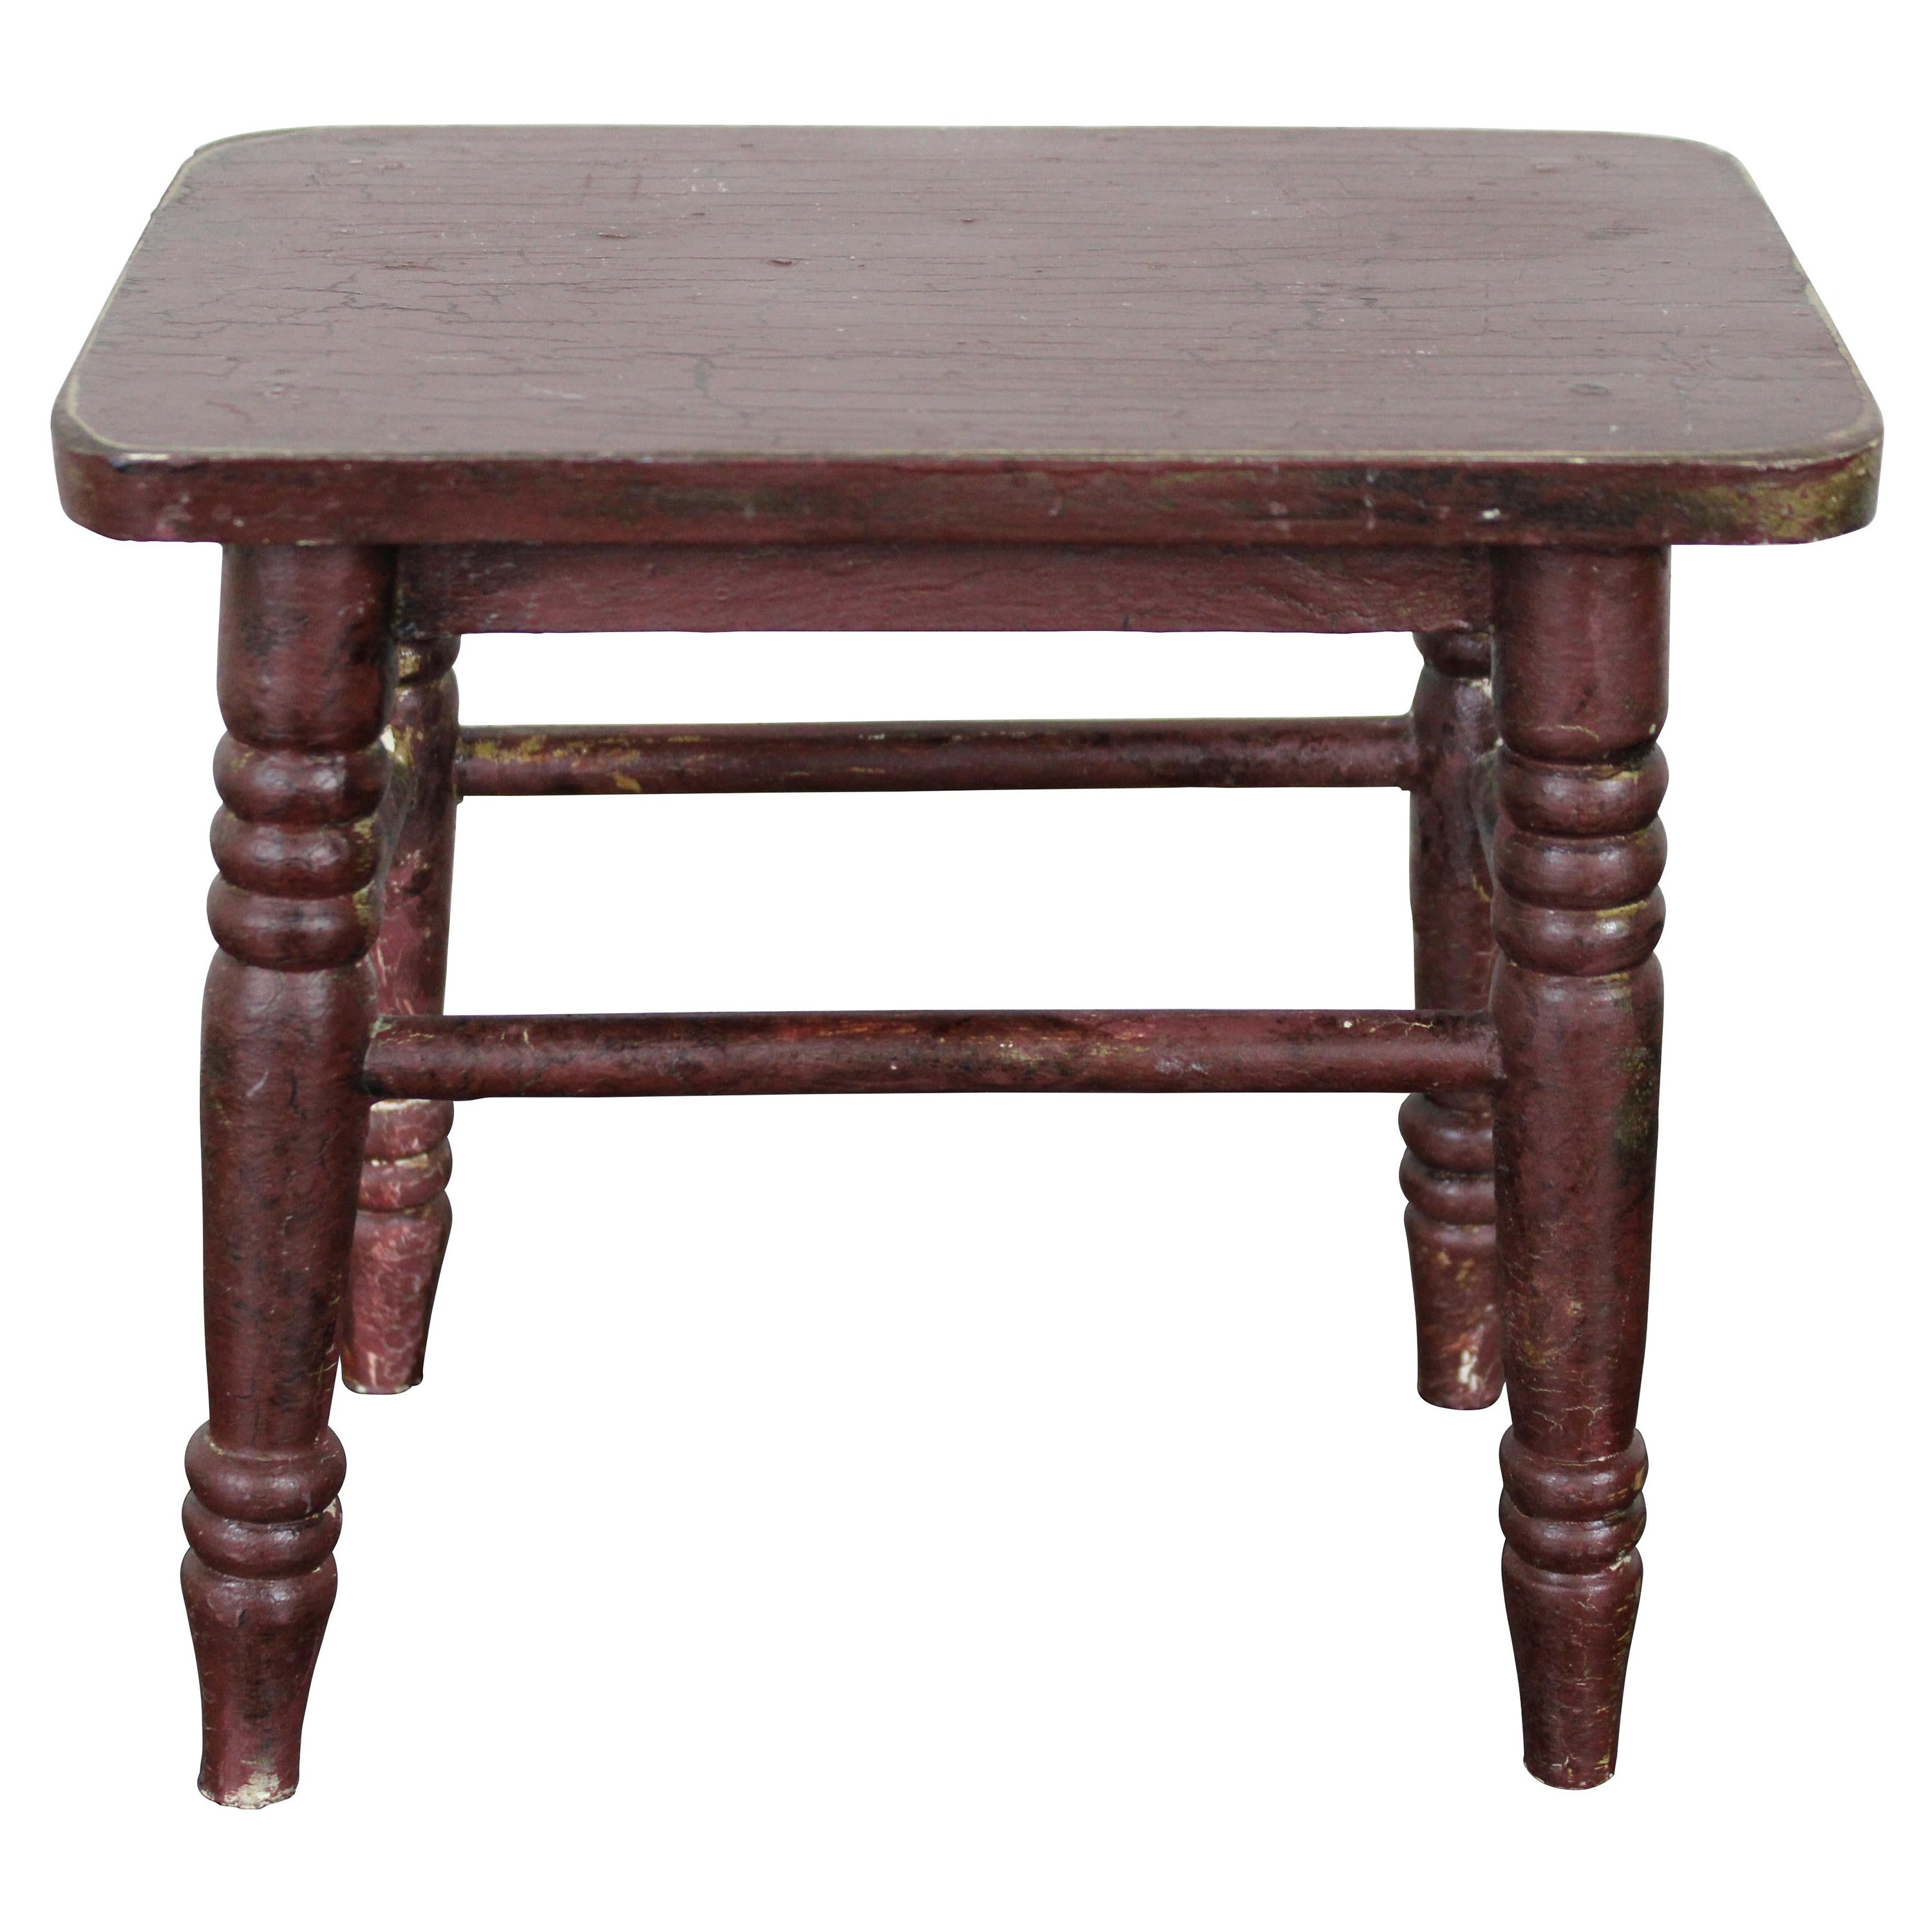 Antique Early American Spool Leg Miniature Stool Side Table Dollhouse Furniture